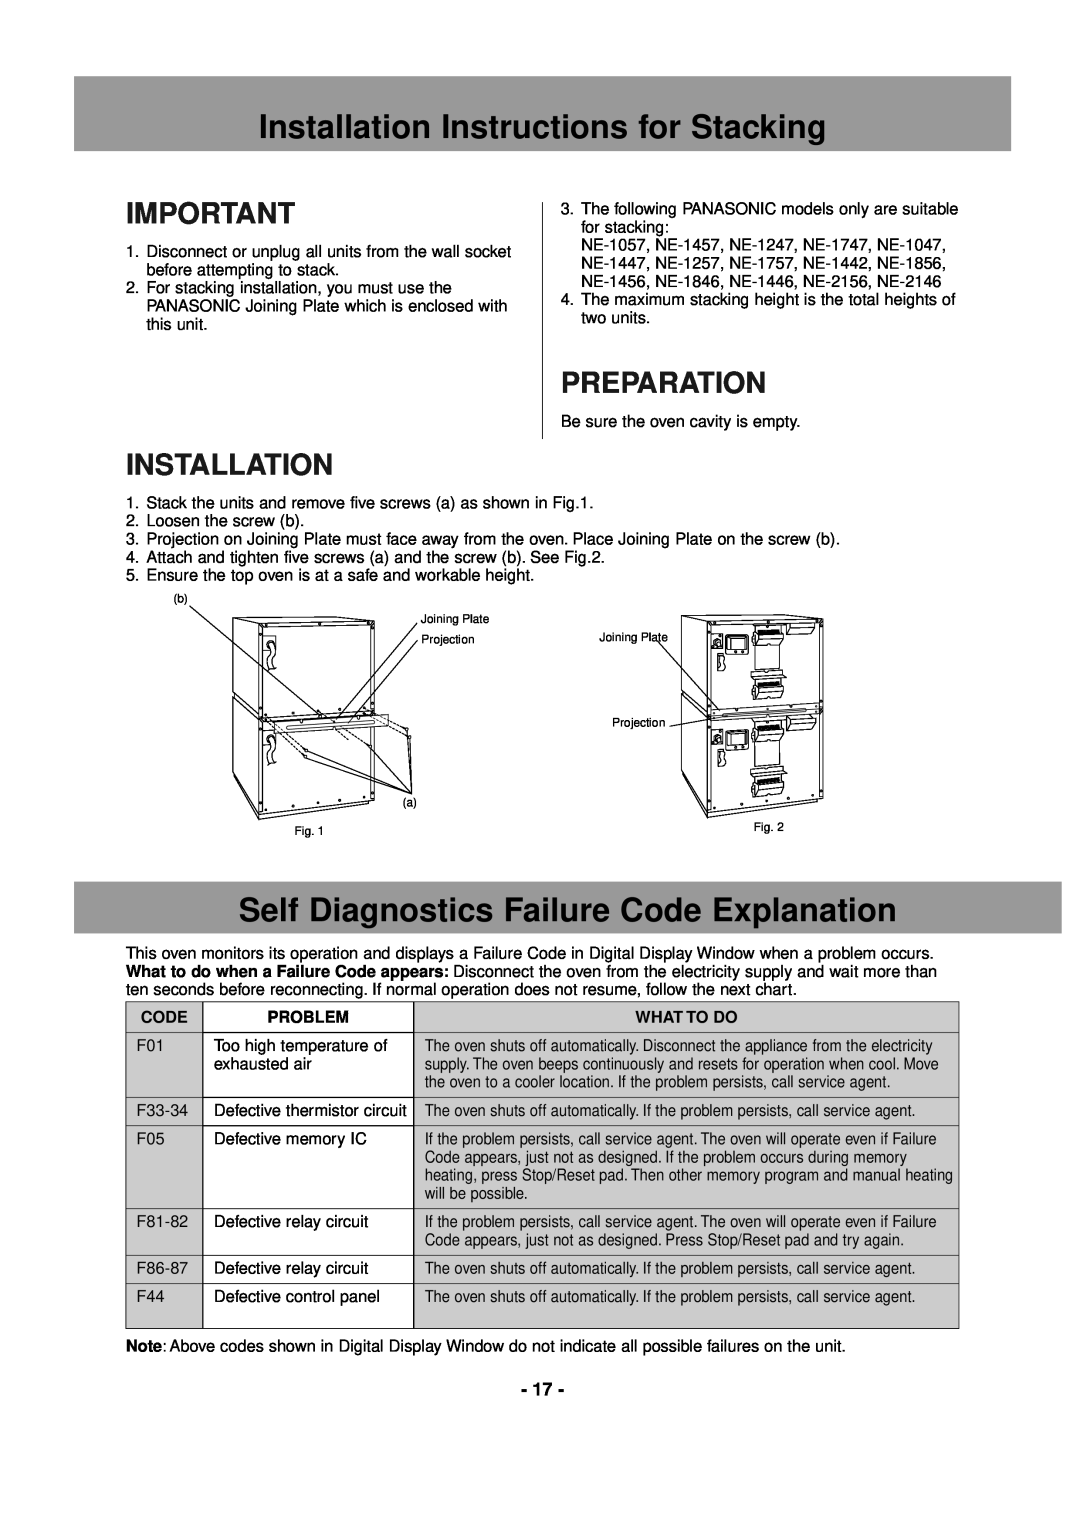 Panasonic NE-2156, NE-1856 Installation Instructions for Stacking, Self Diagnostics Failure Code Explanation, Preparation 